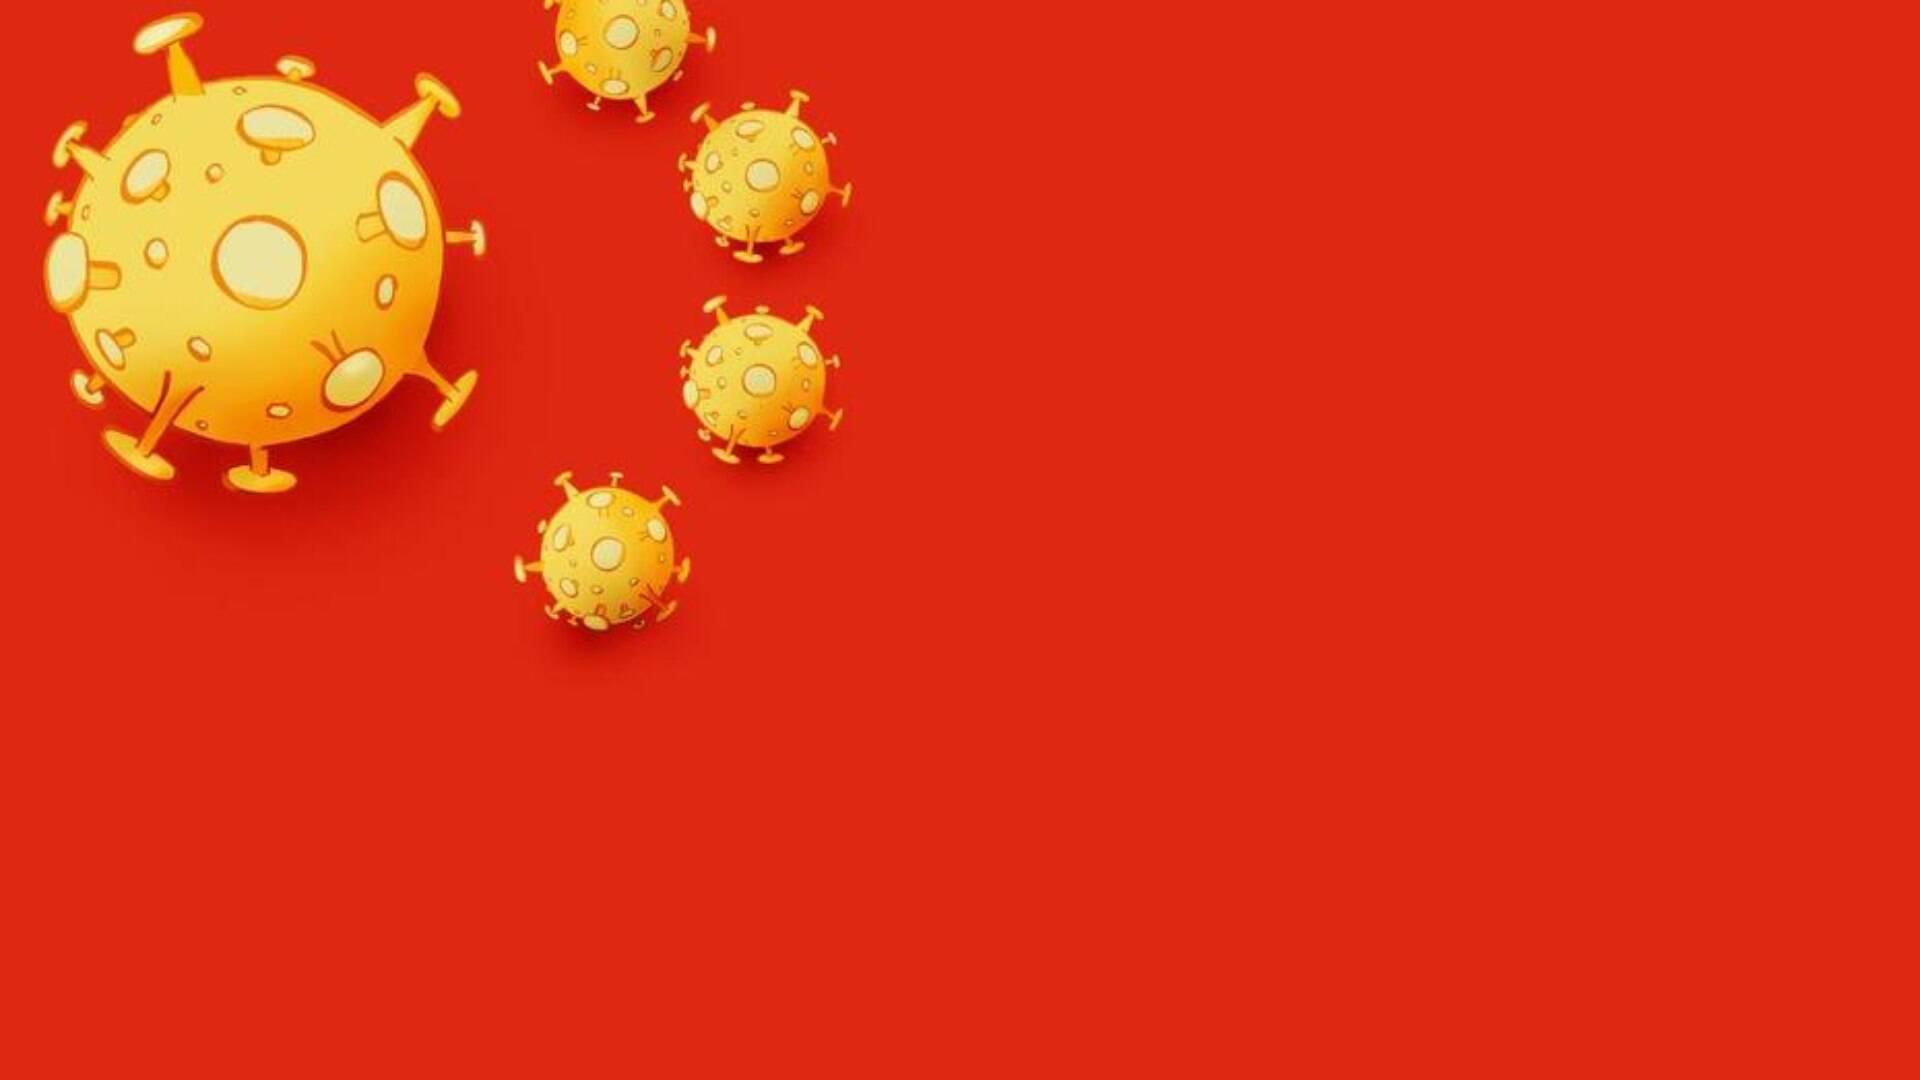 Charge sobre coronavírus feita por jornal europeu irrita China ...